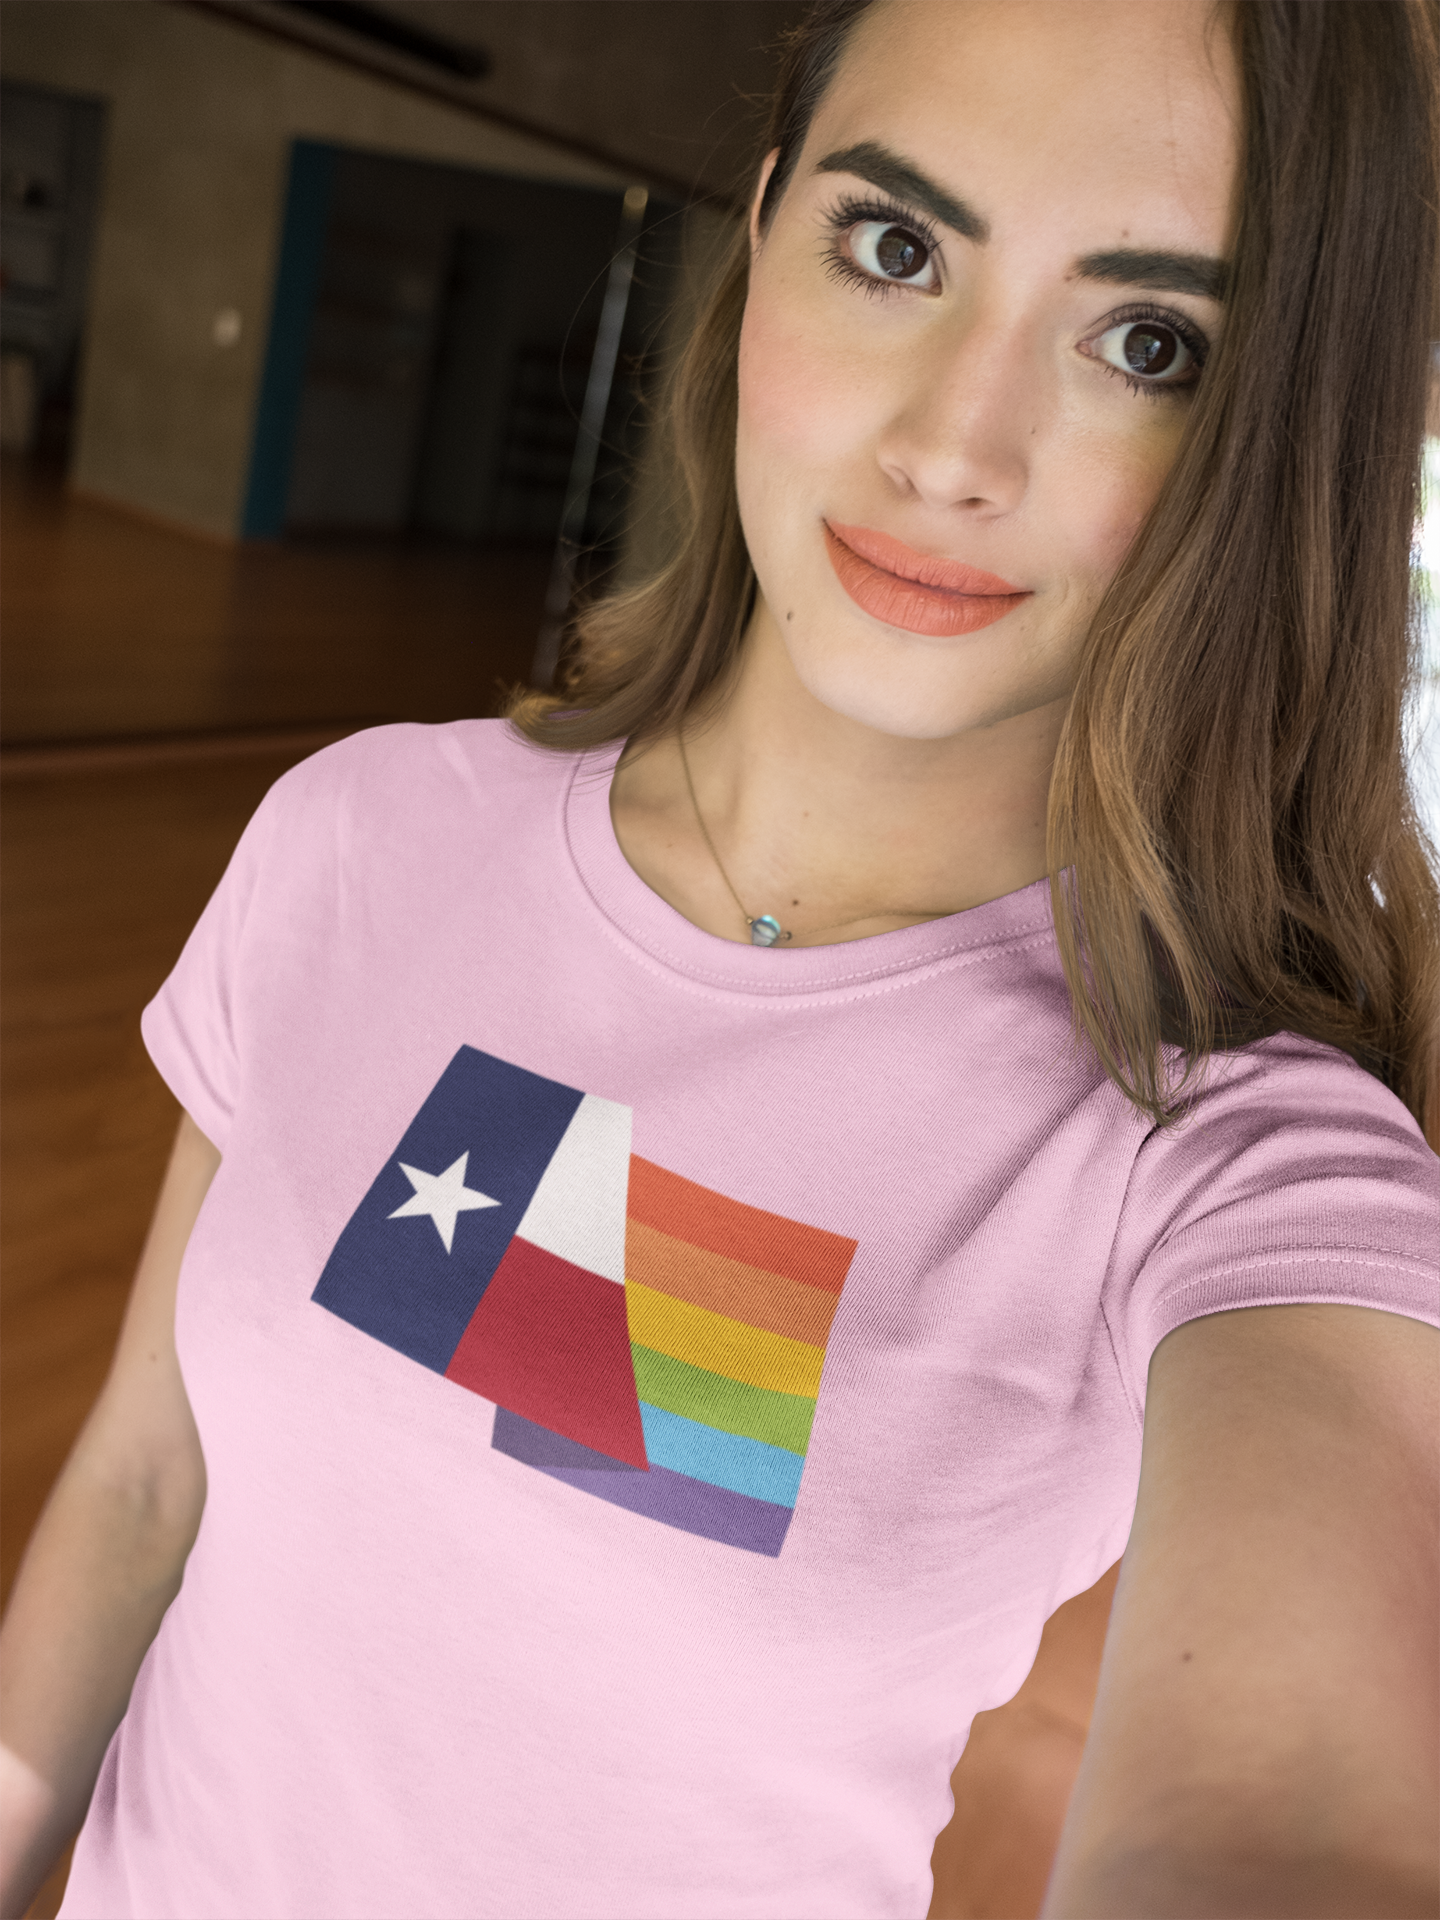 Texas Pride - Women's Shirt